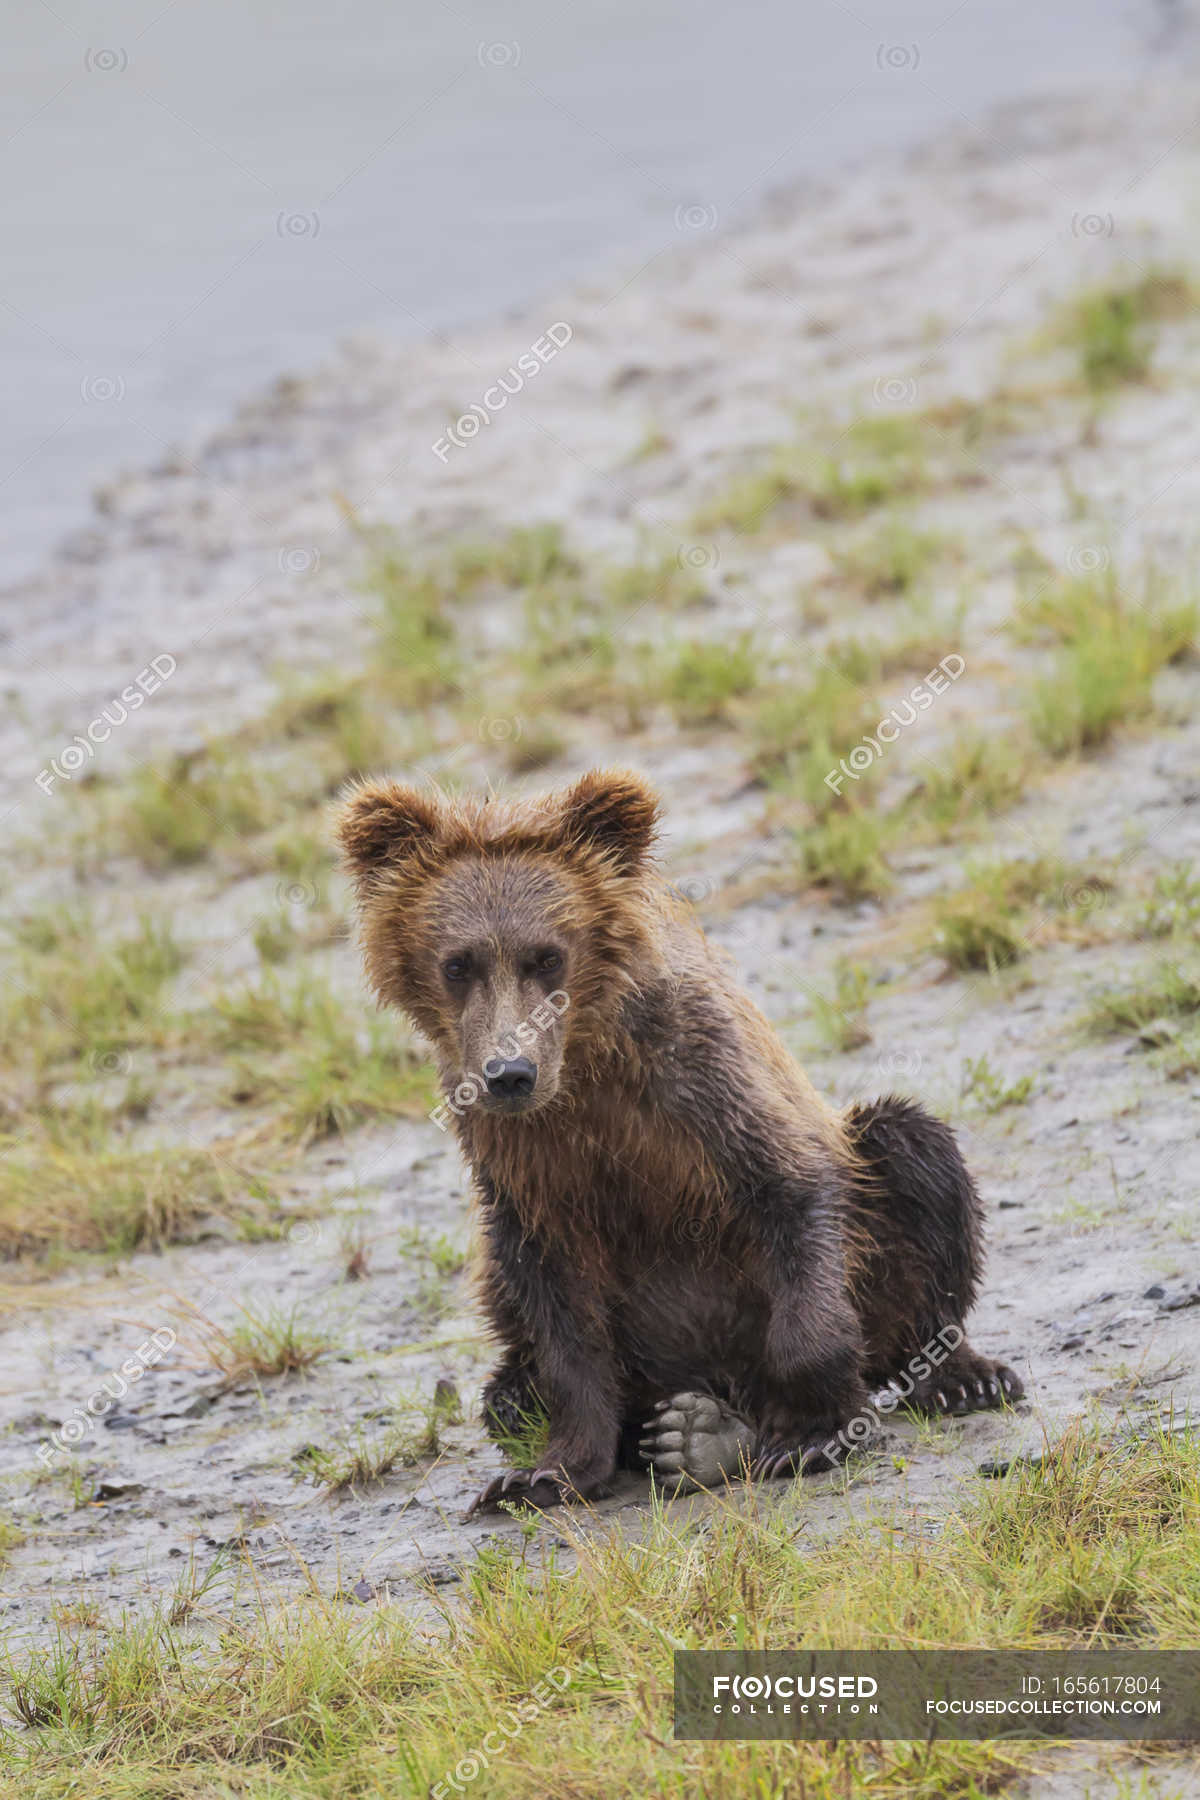 Coastal brown bear spring cub — Stock Photo | #165617804